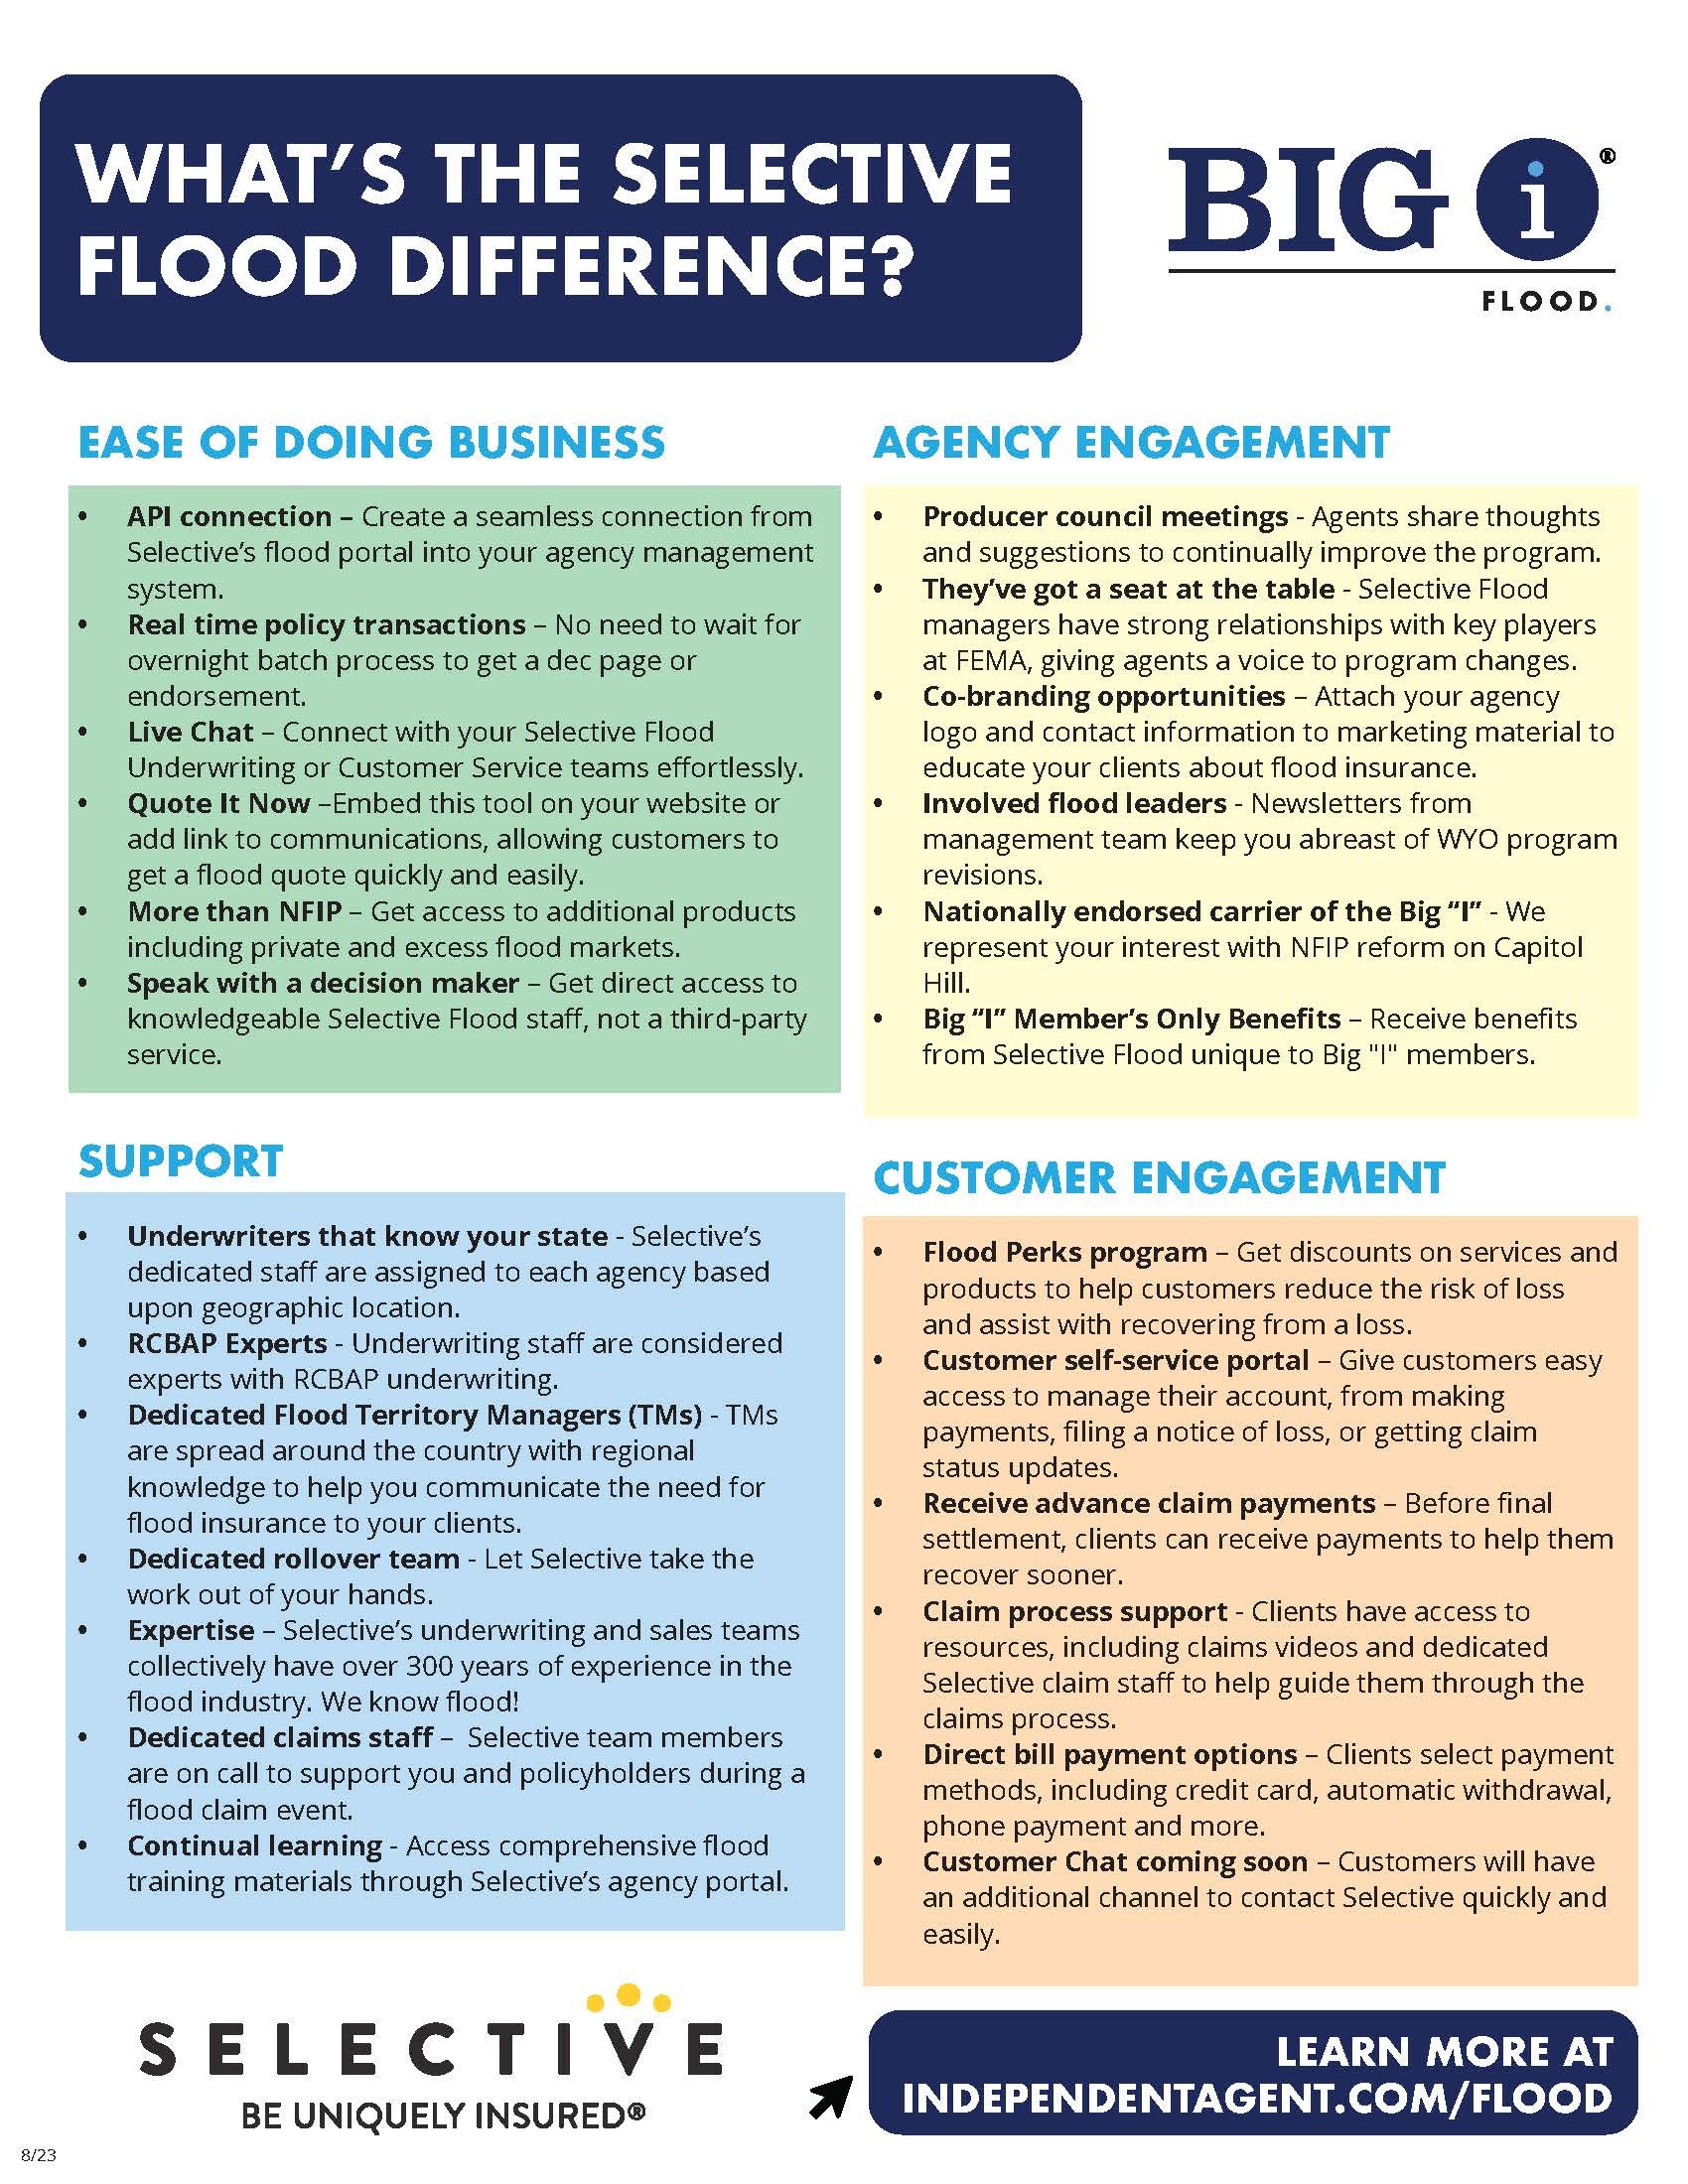 Why Selective Flood